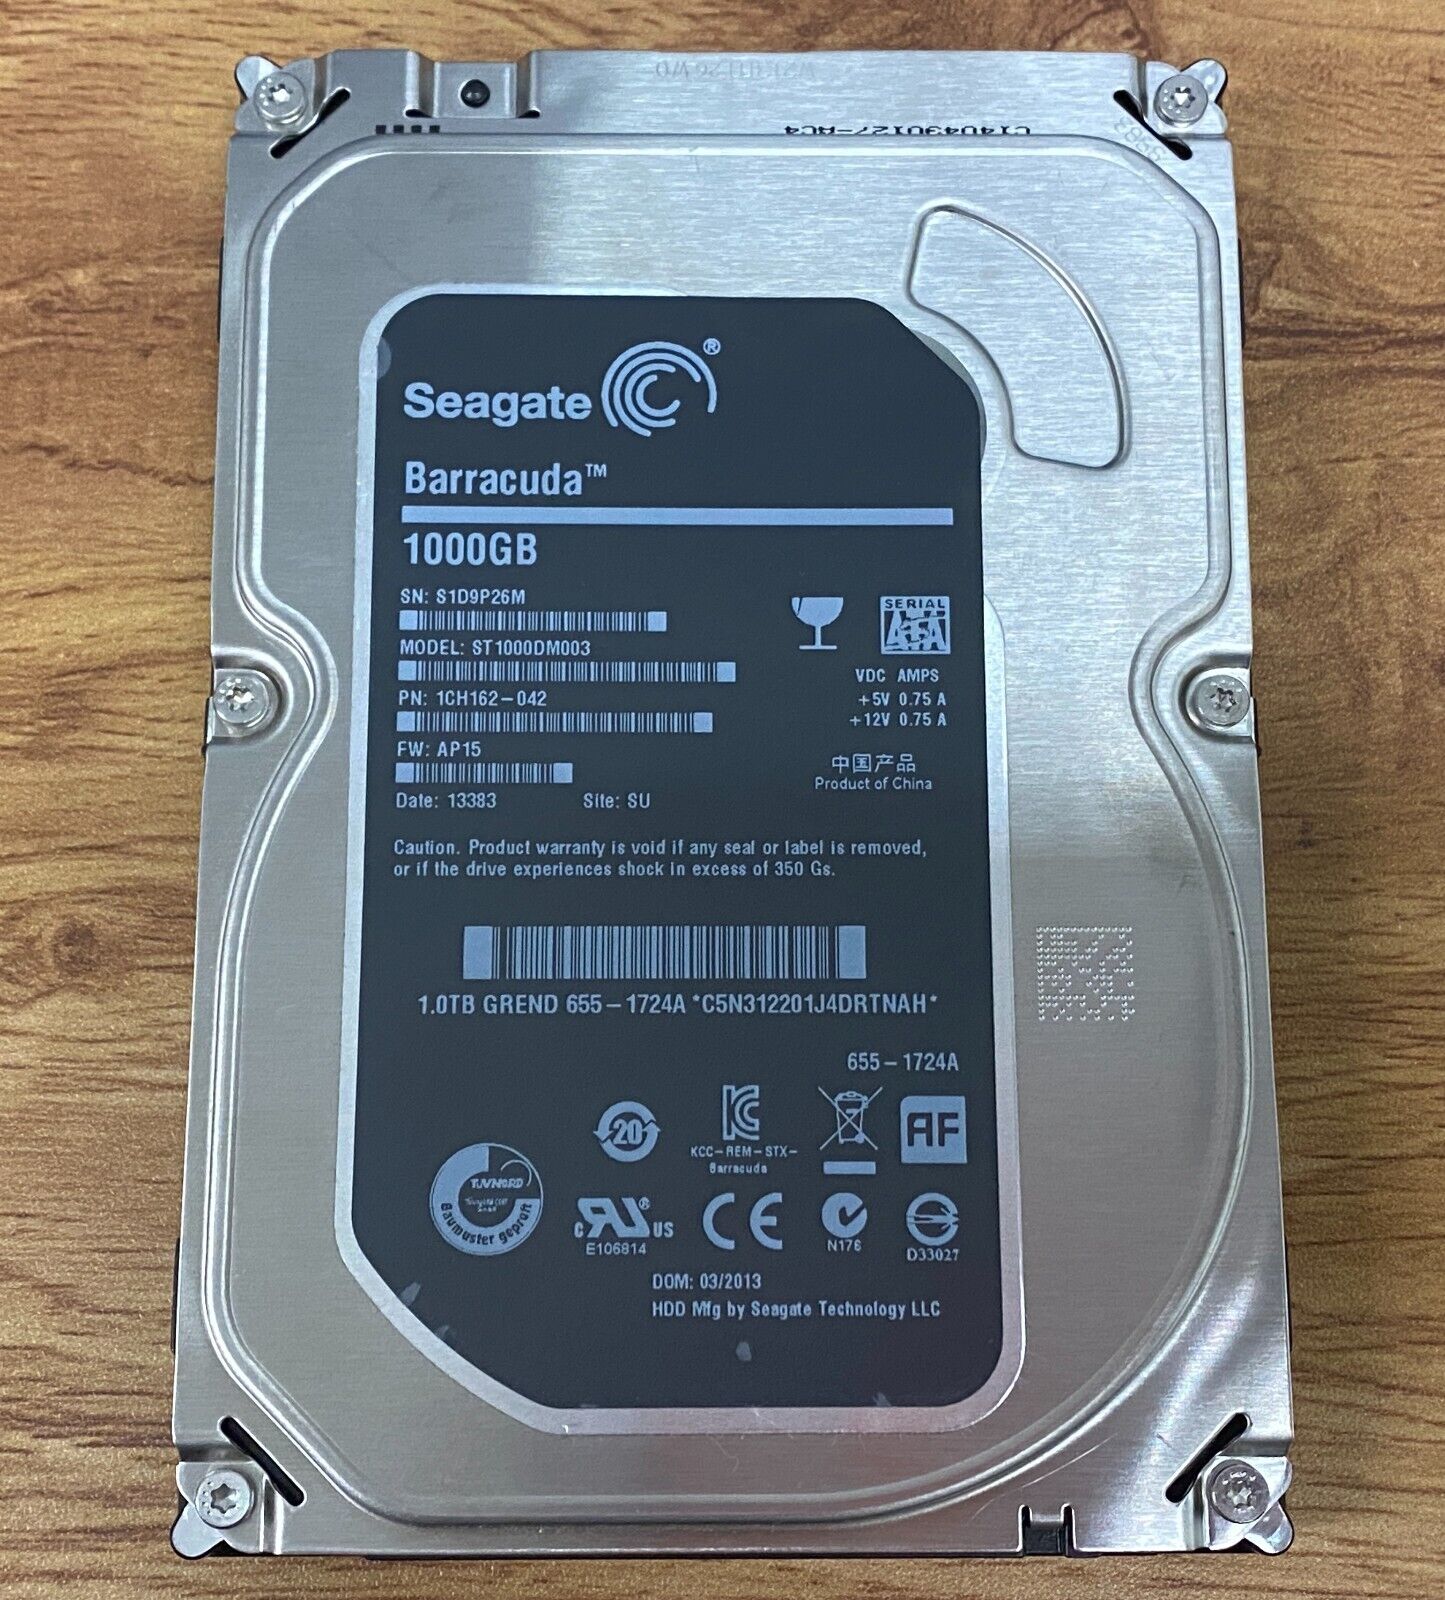 SEAGATE Barracuda 1000GB Desktop 3.5